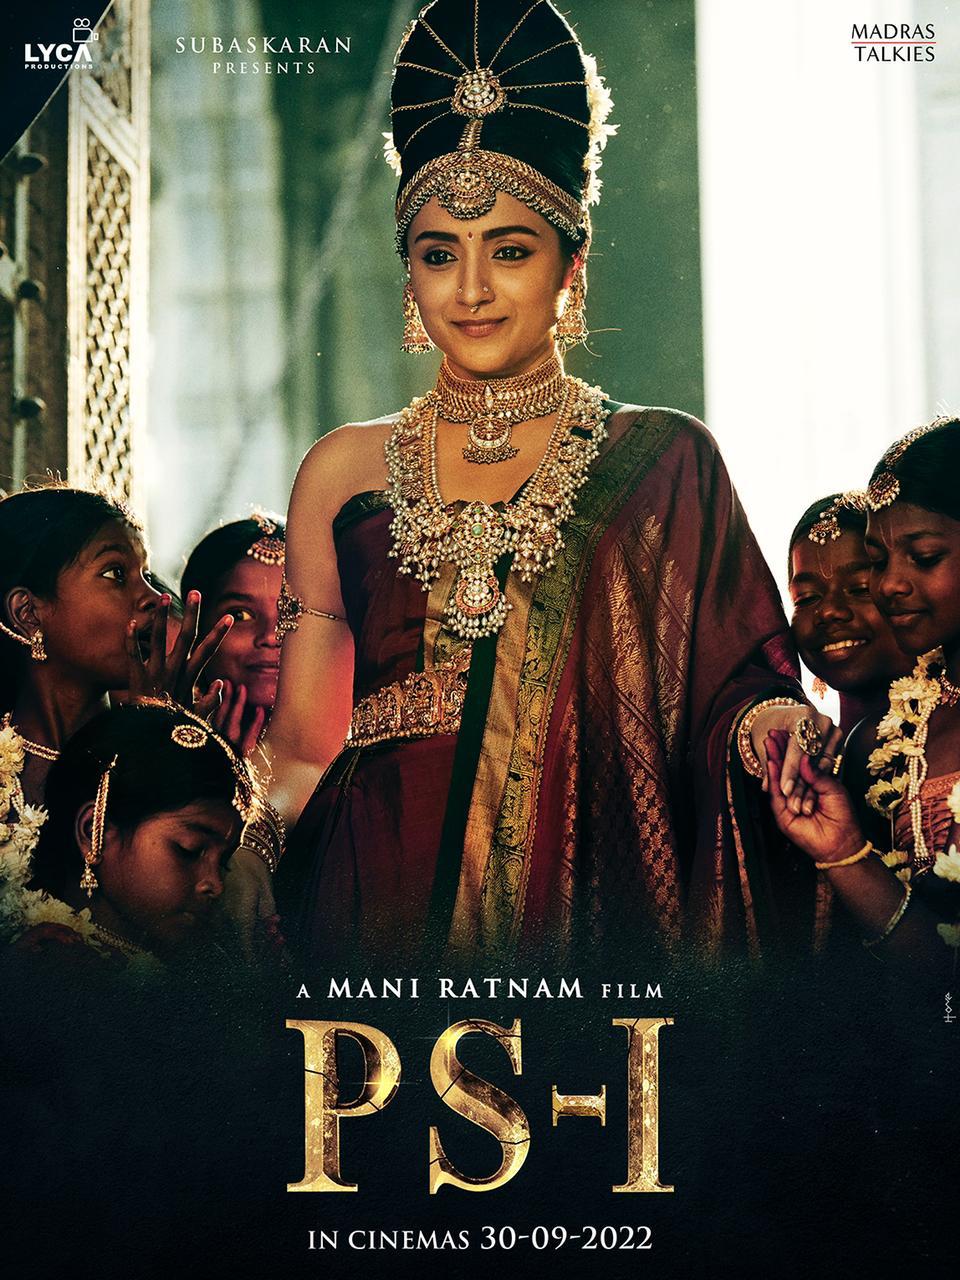 Photos: Mani Ratnam's 'PS-1' Starring Aishwarya Rai Bachchan & Vikram Among Others Set To Release On September 30